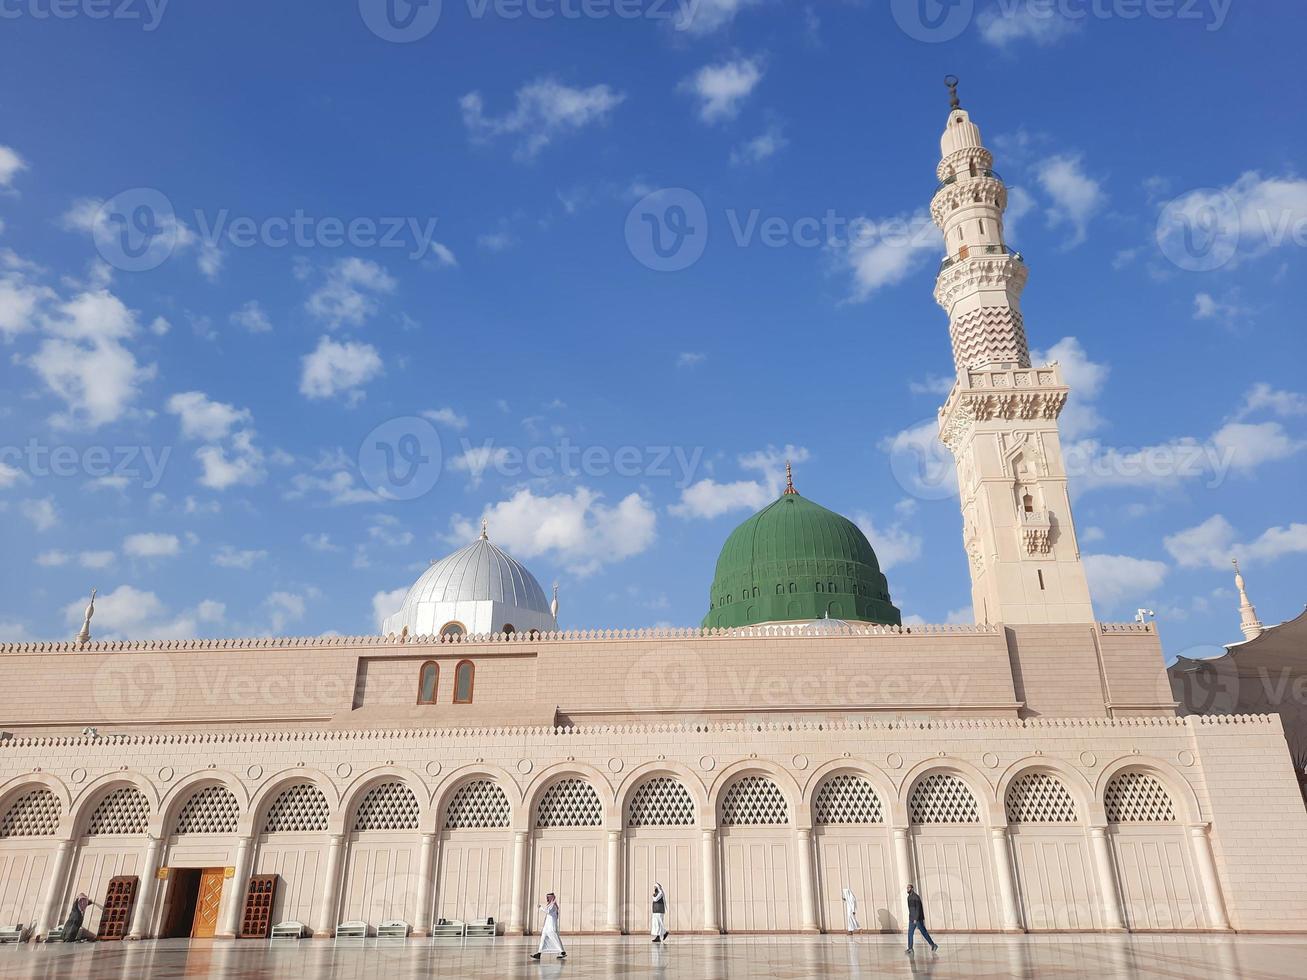 mooi dag visie van masjid al nabawi, medina, saudi Arabië. foto